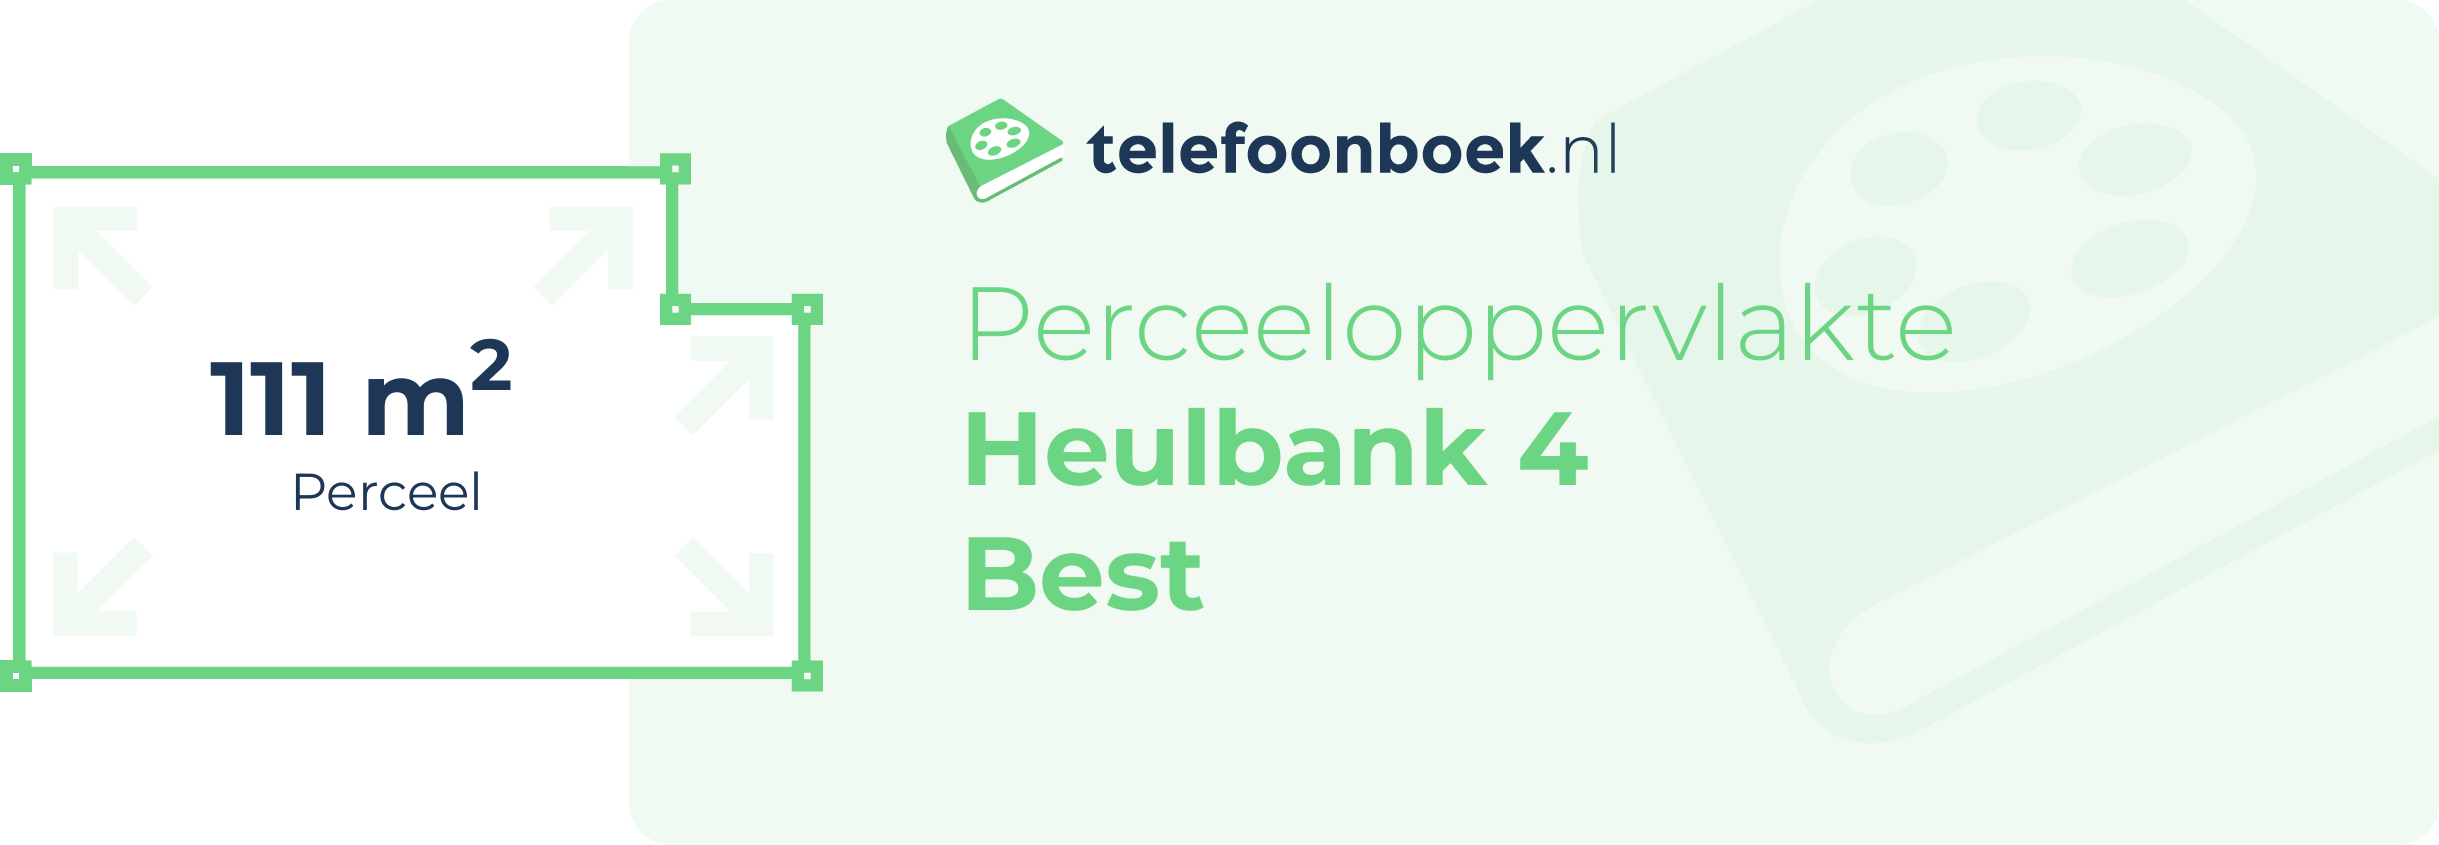 Perceeloppervlakte Heulbank 4 Best